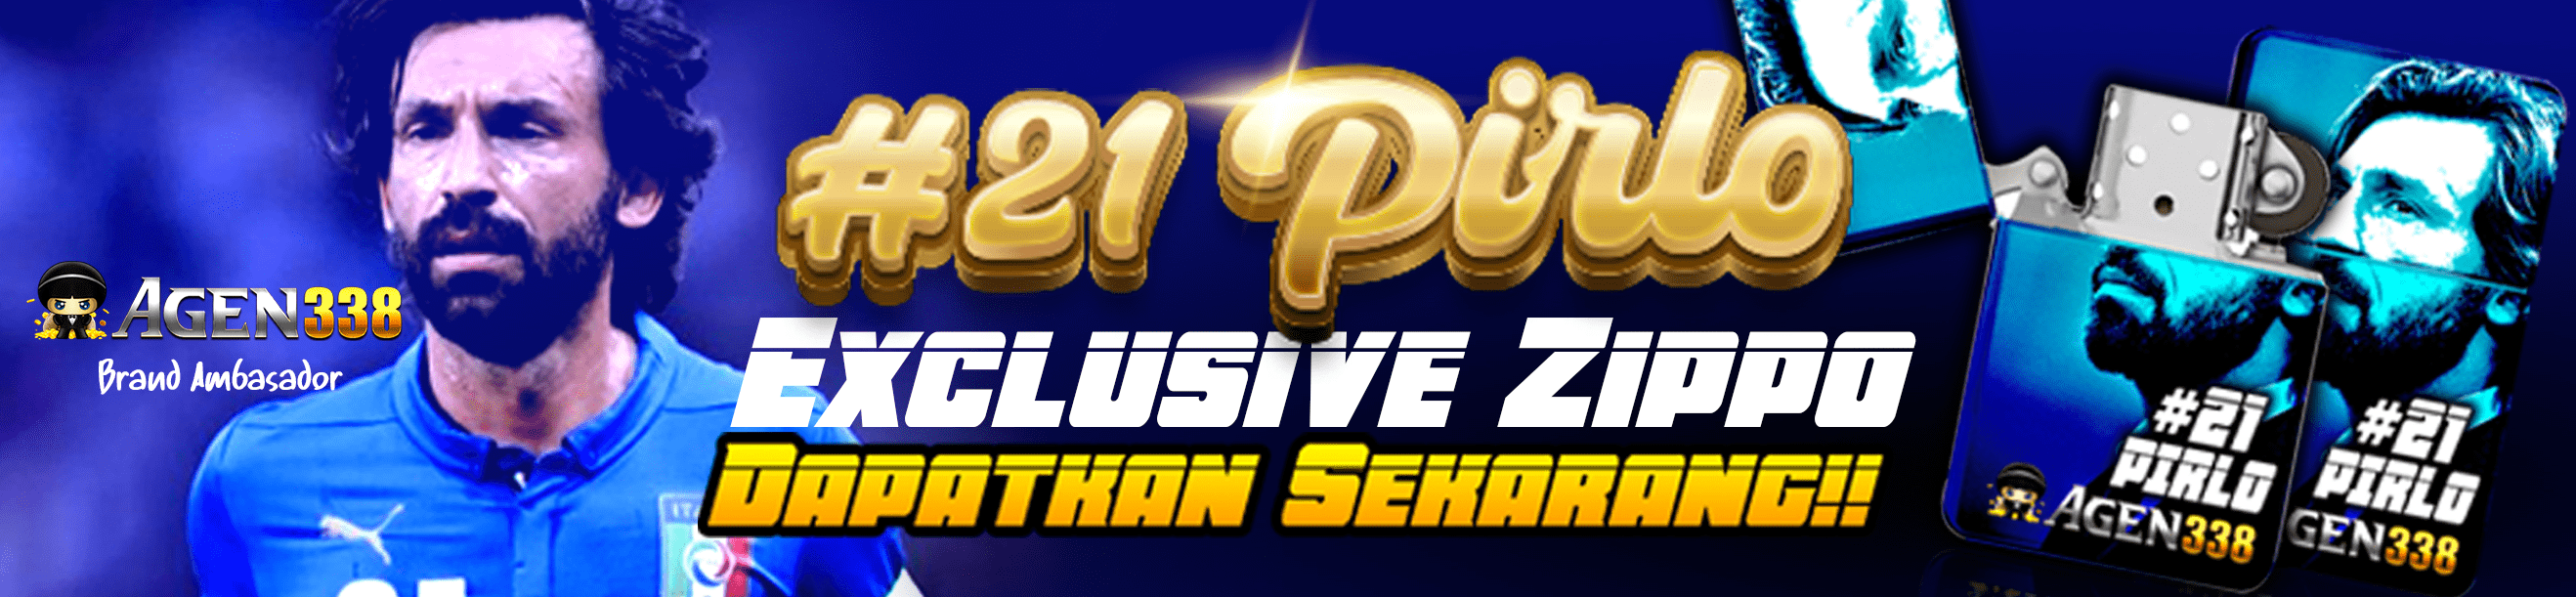 Zippo Exclusive Pirlo Agen338